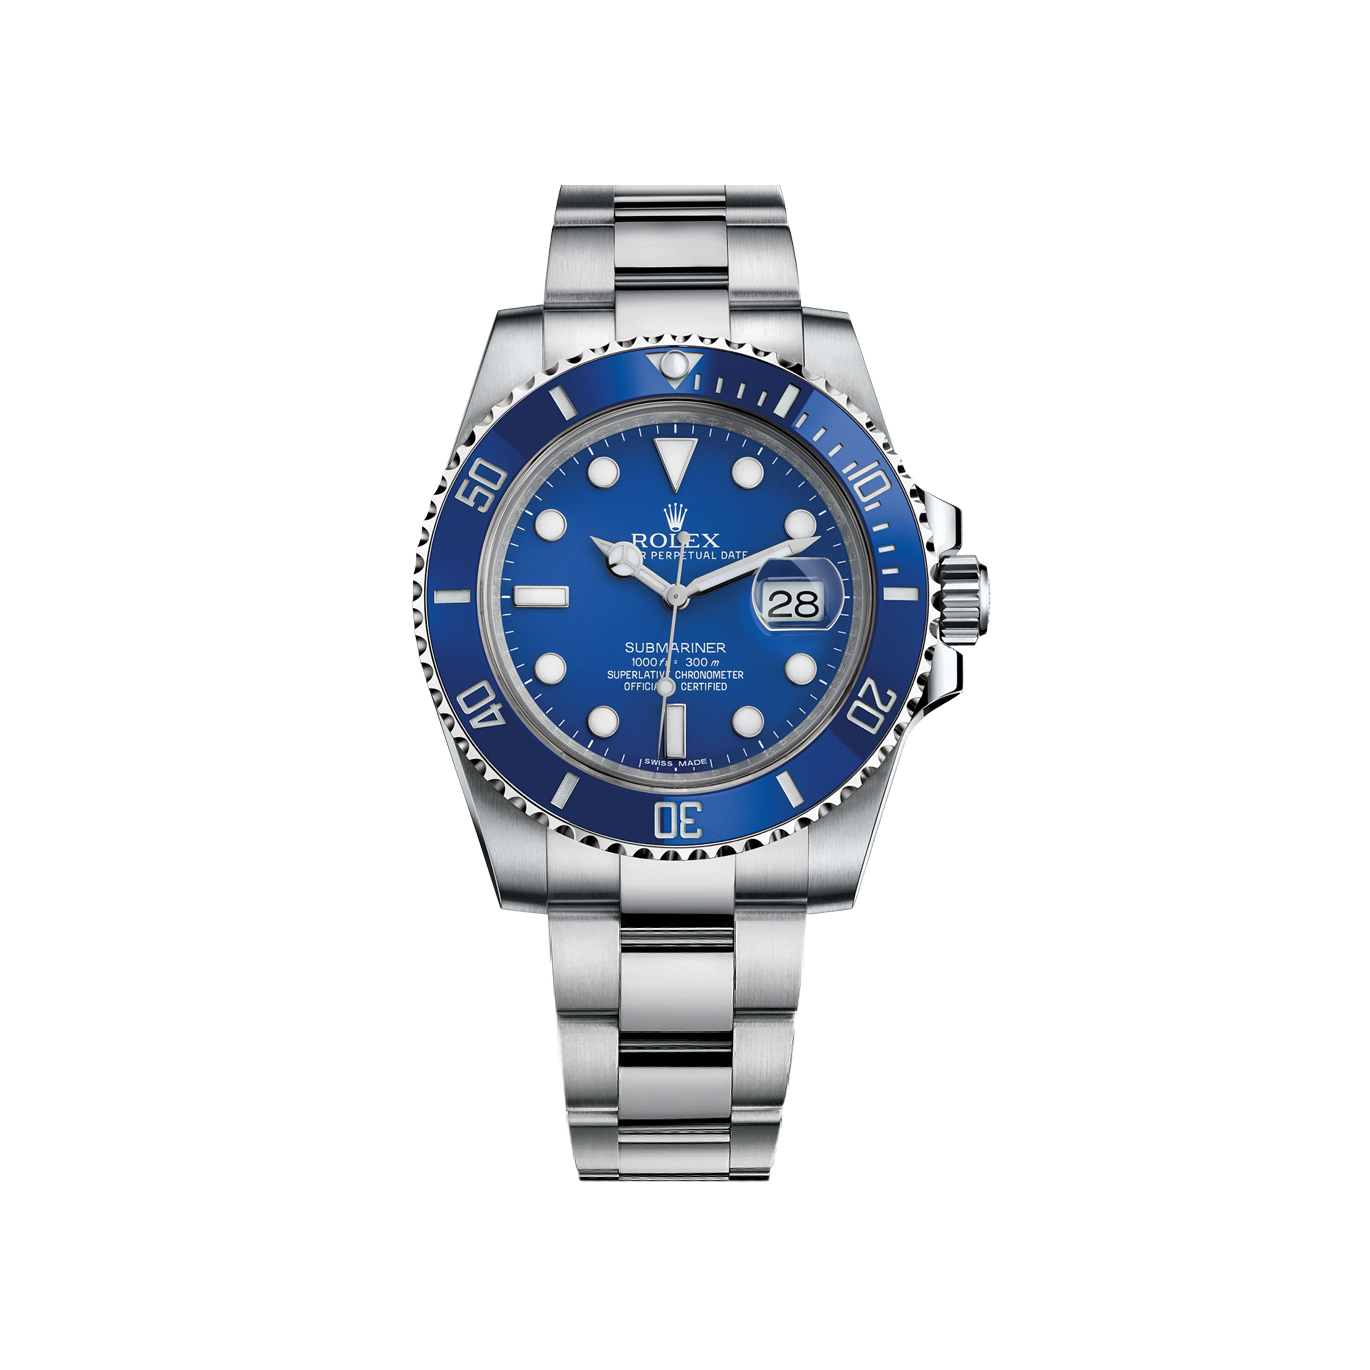 Submariner 116619LB White Gold Watch (Blue)